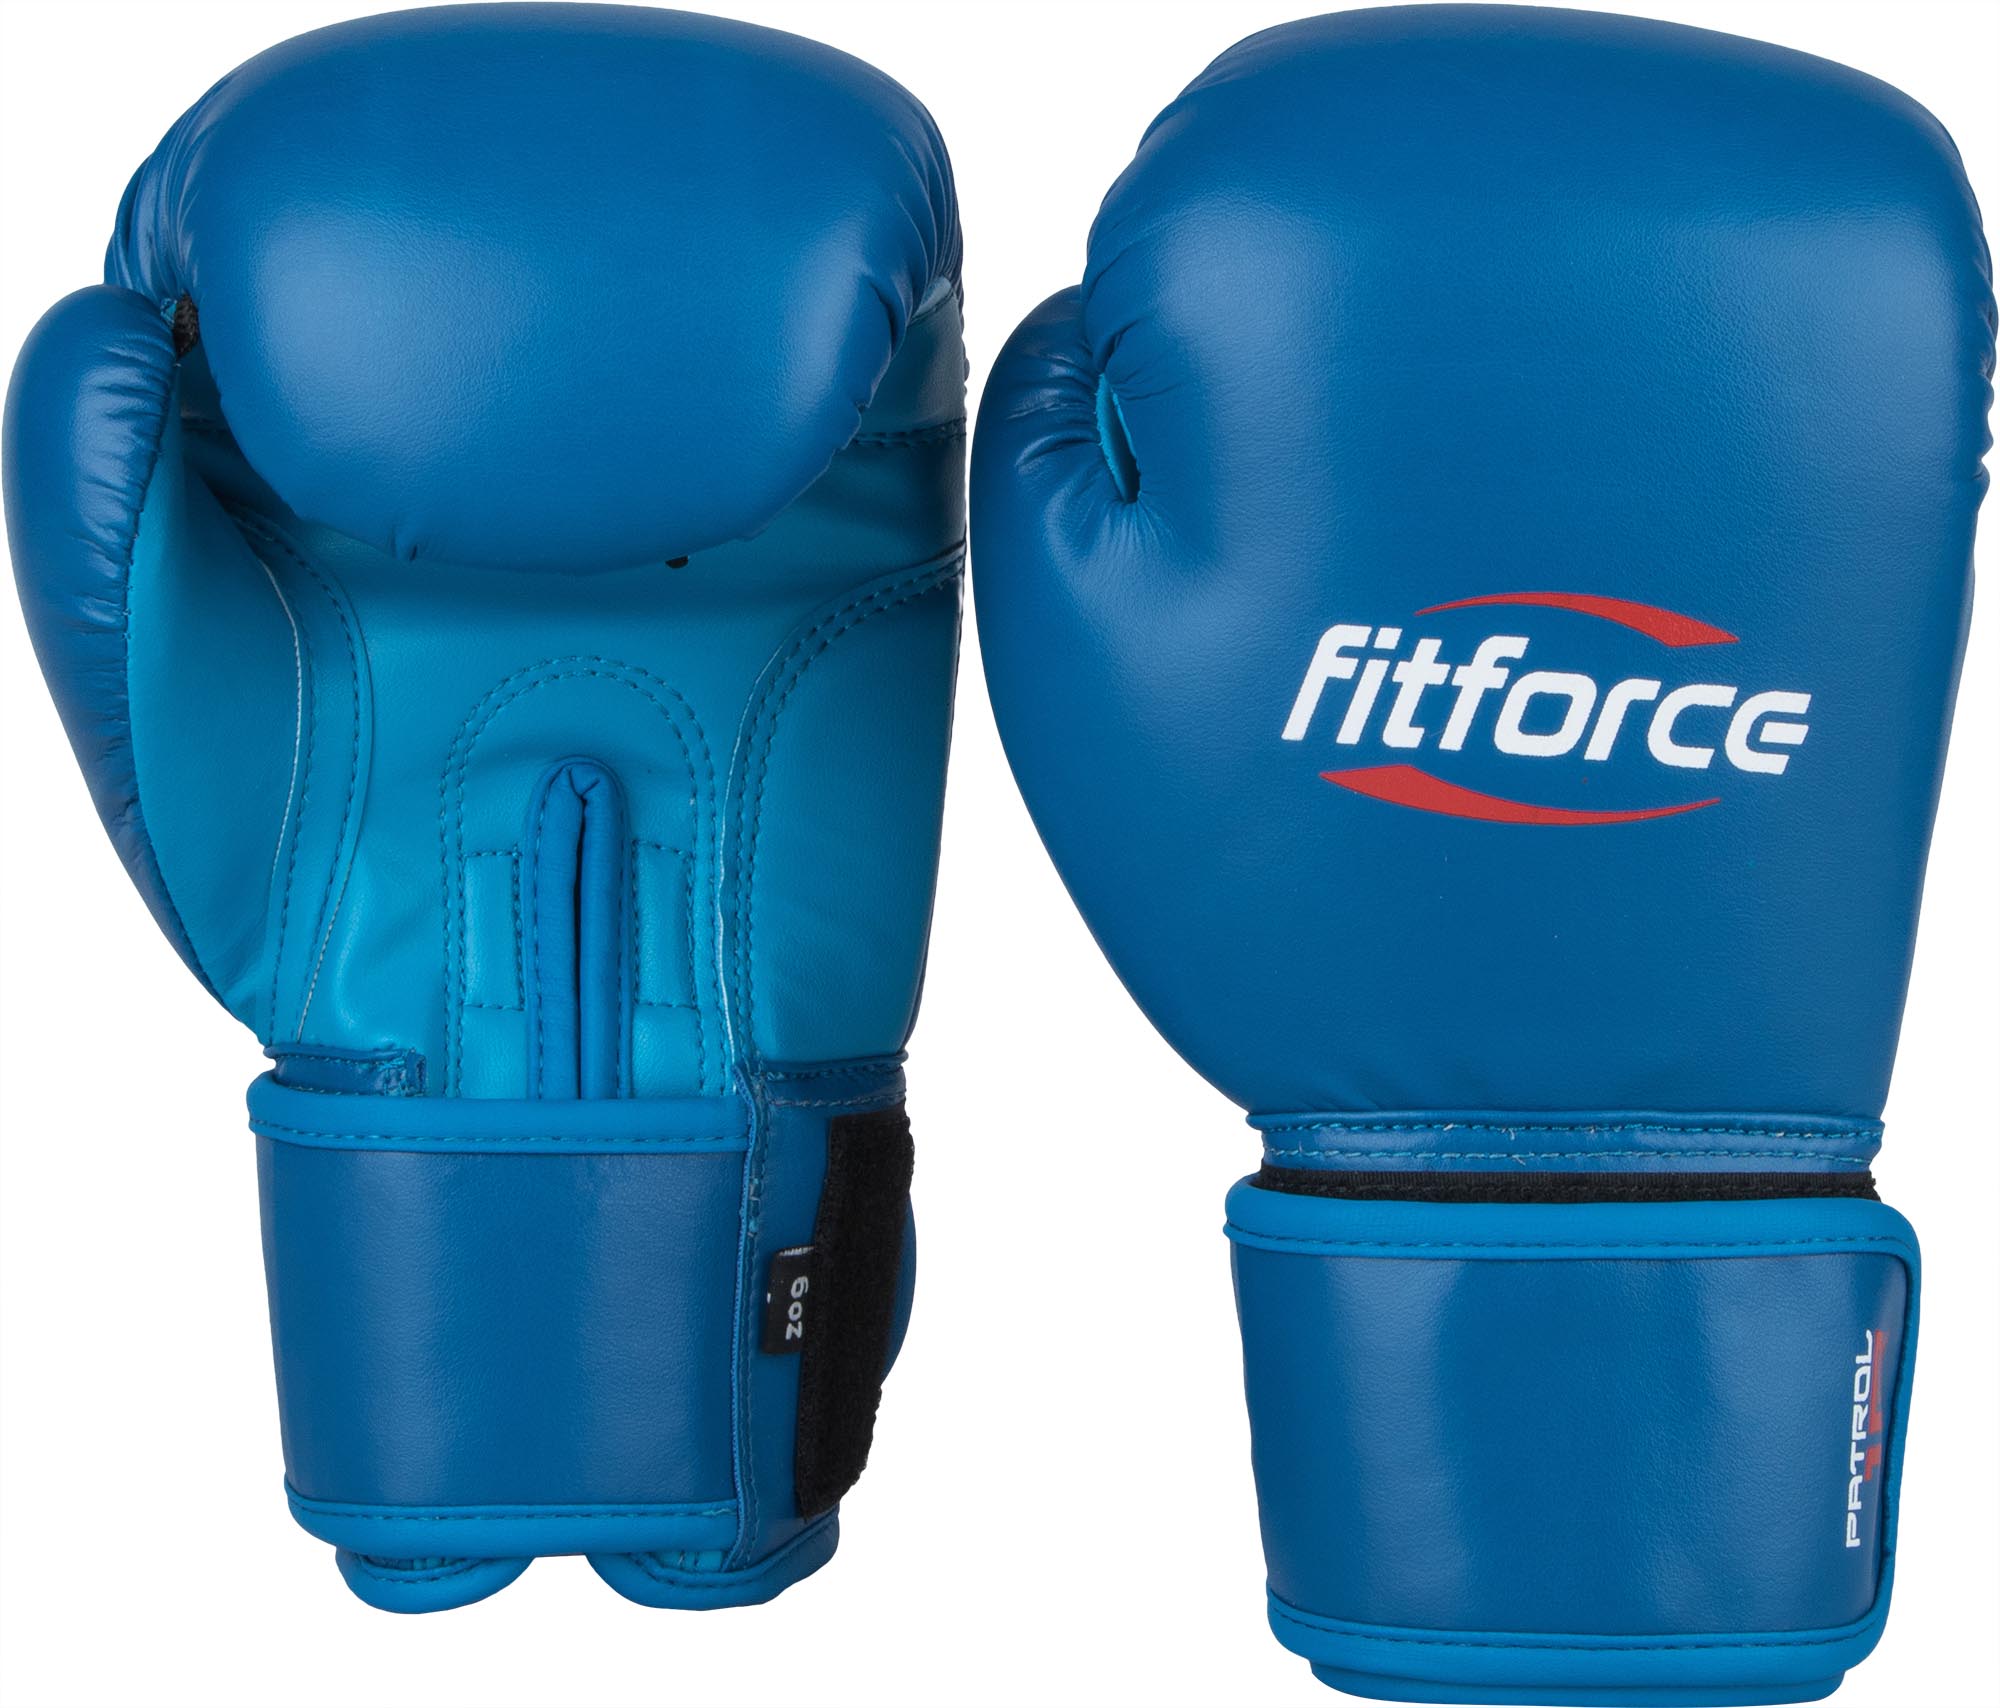 Junior boxer gloves